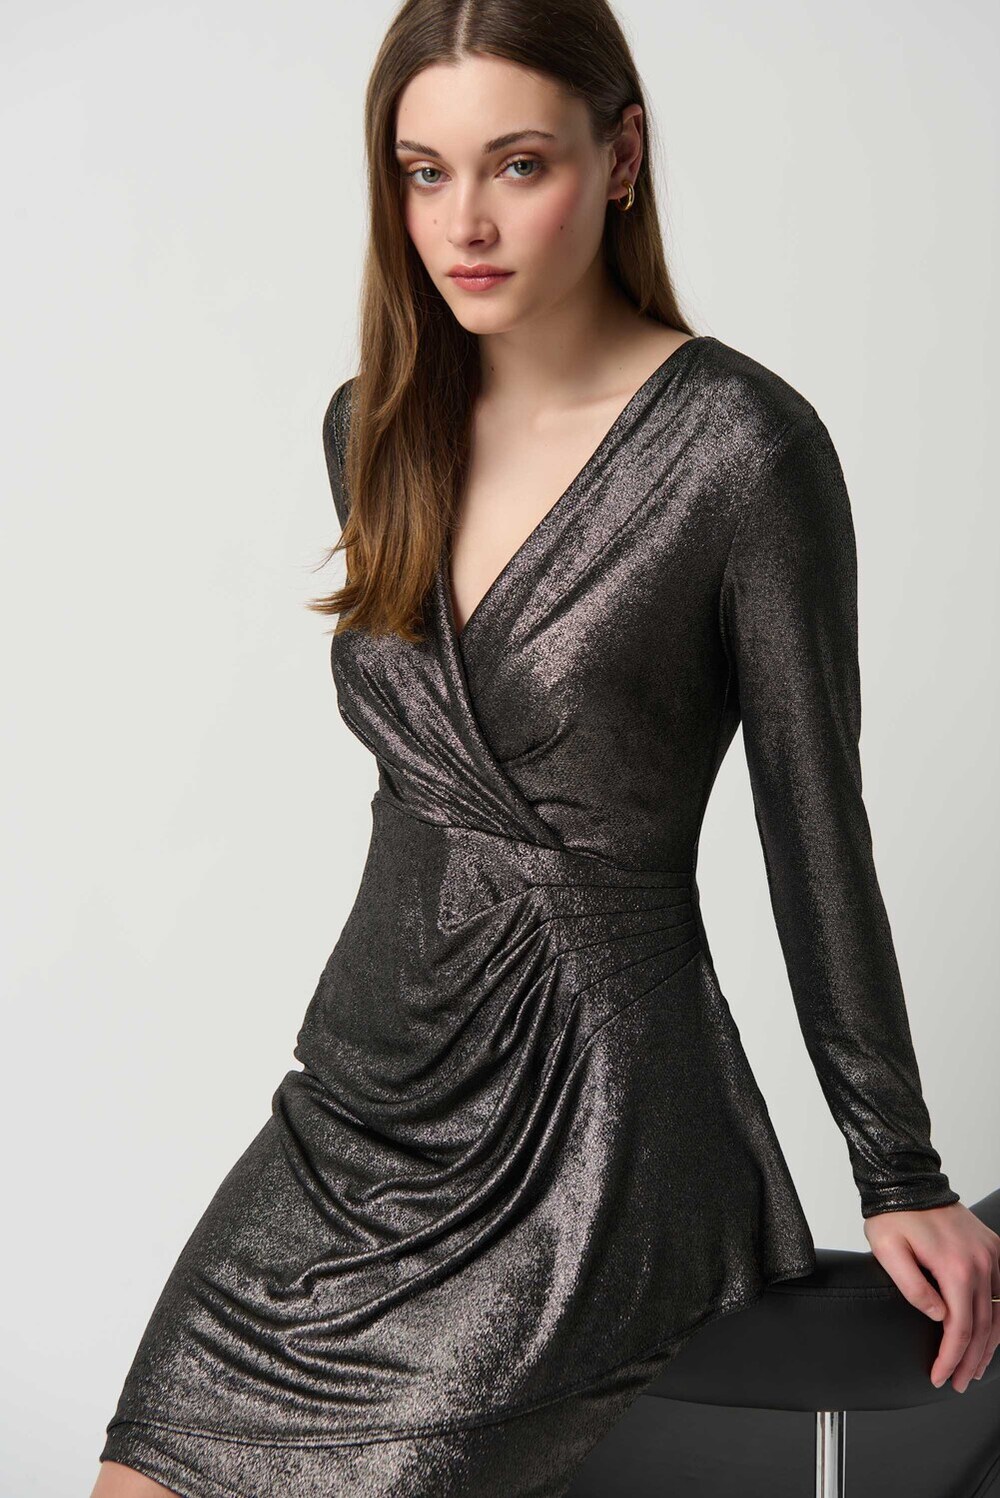 Metallic Wrap Front Dress Style 234124. Pewter